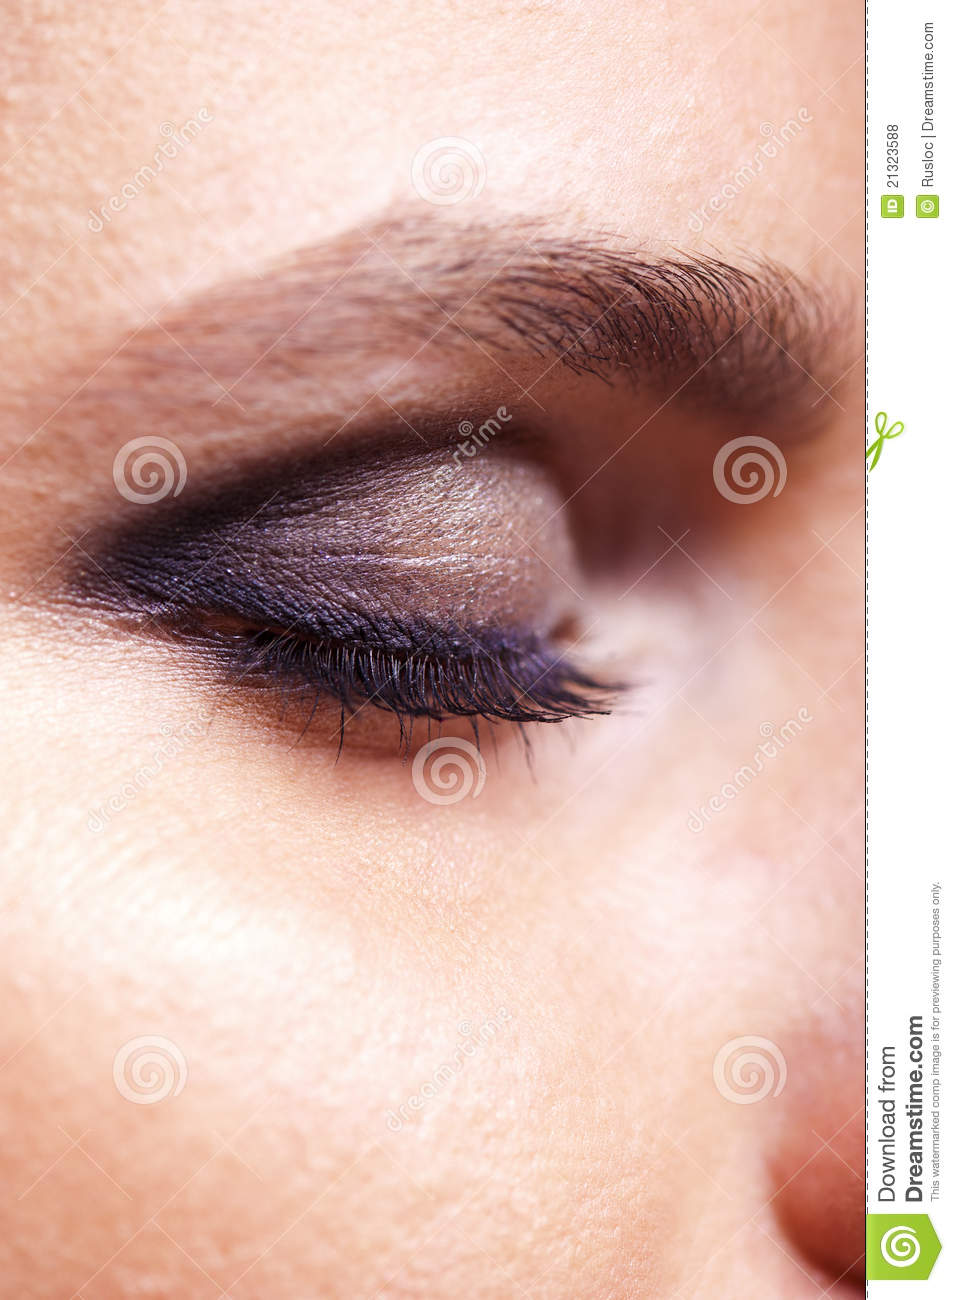 Girl S Closed Eye With Smoky Eye Makeup